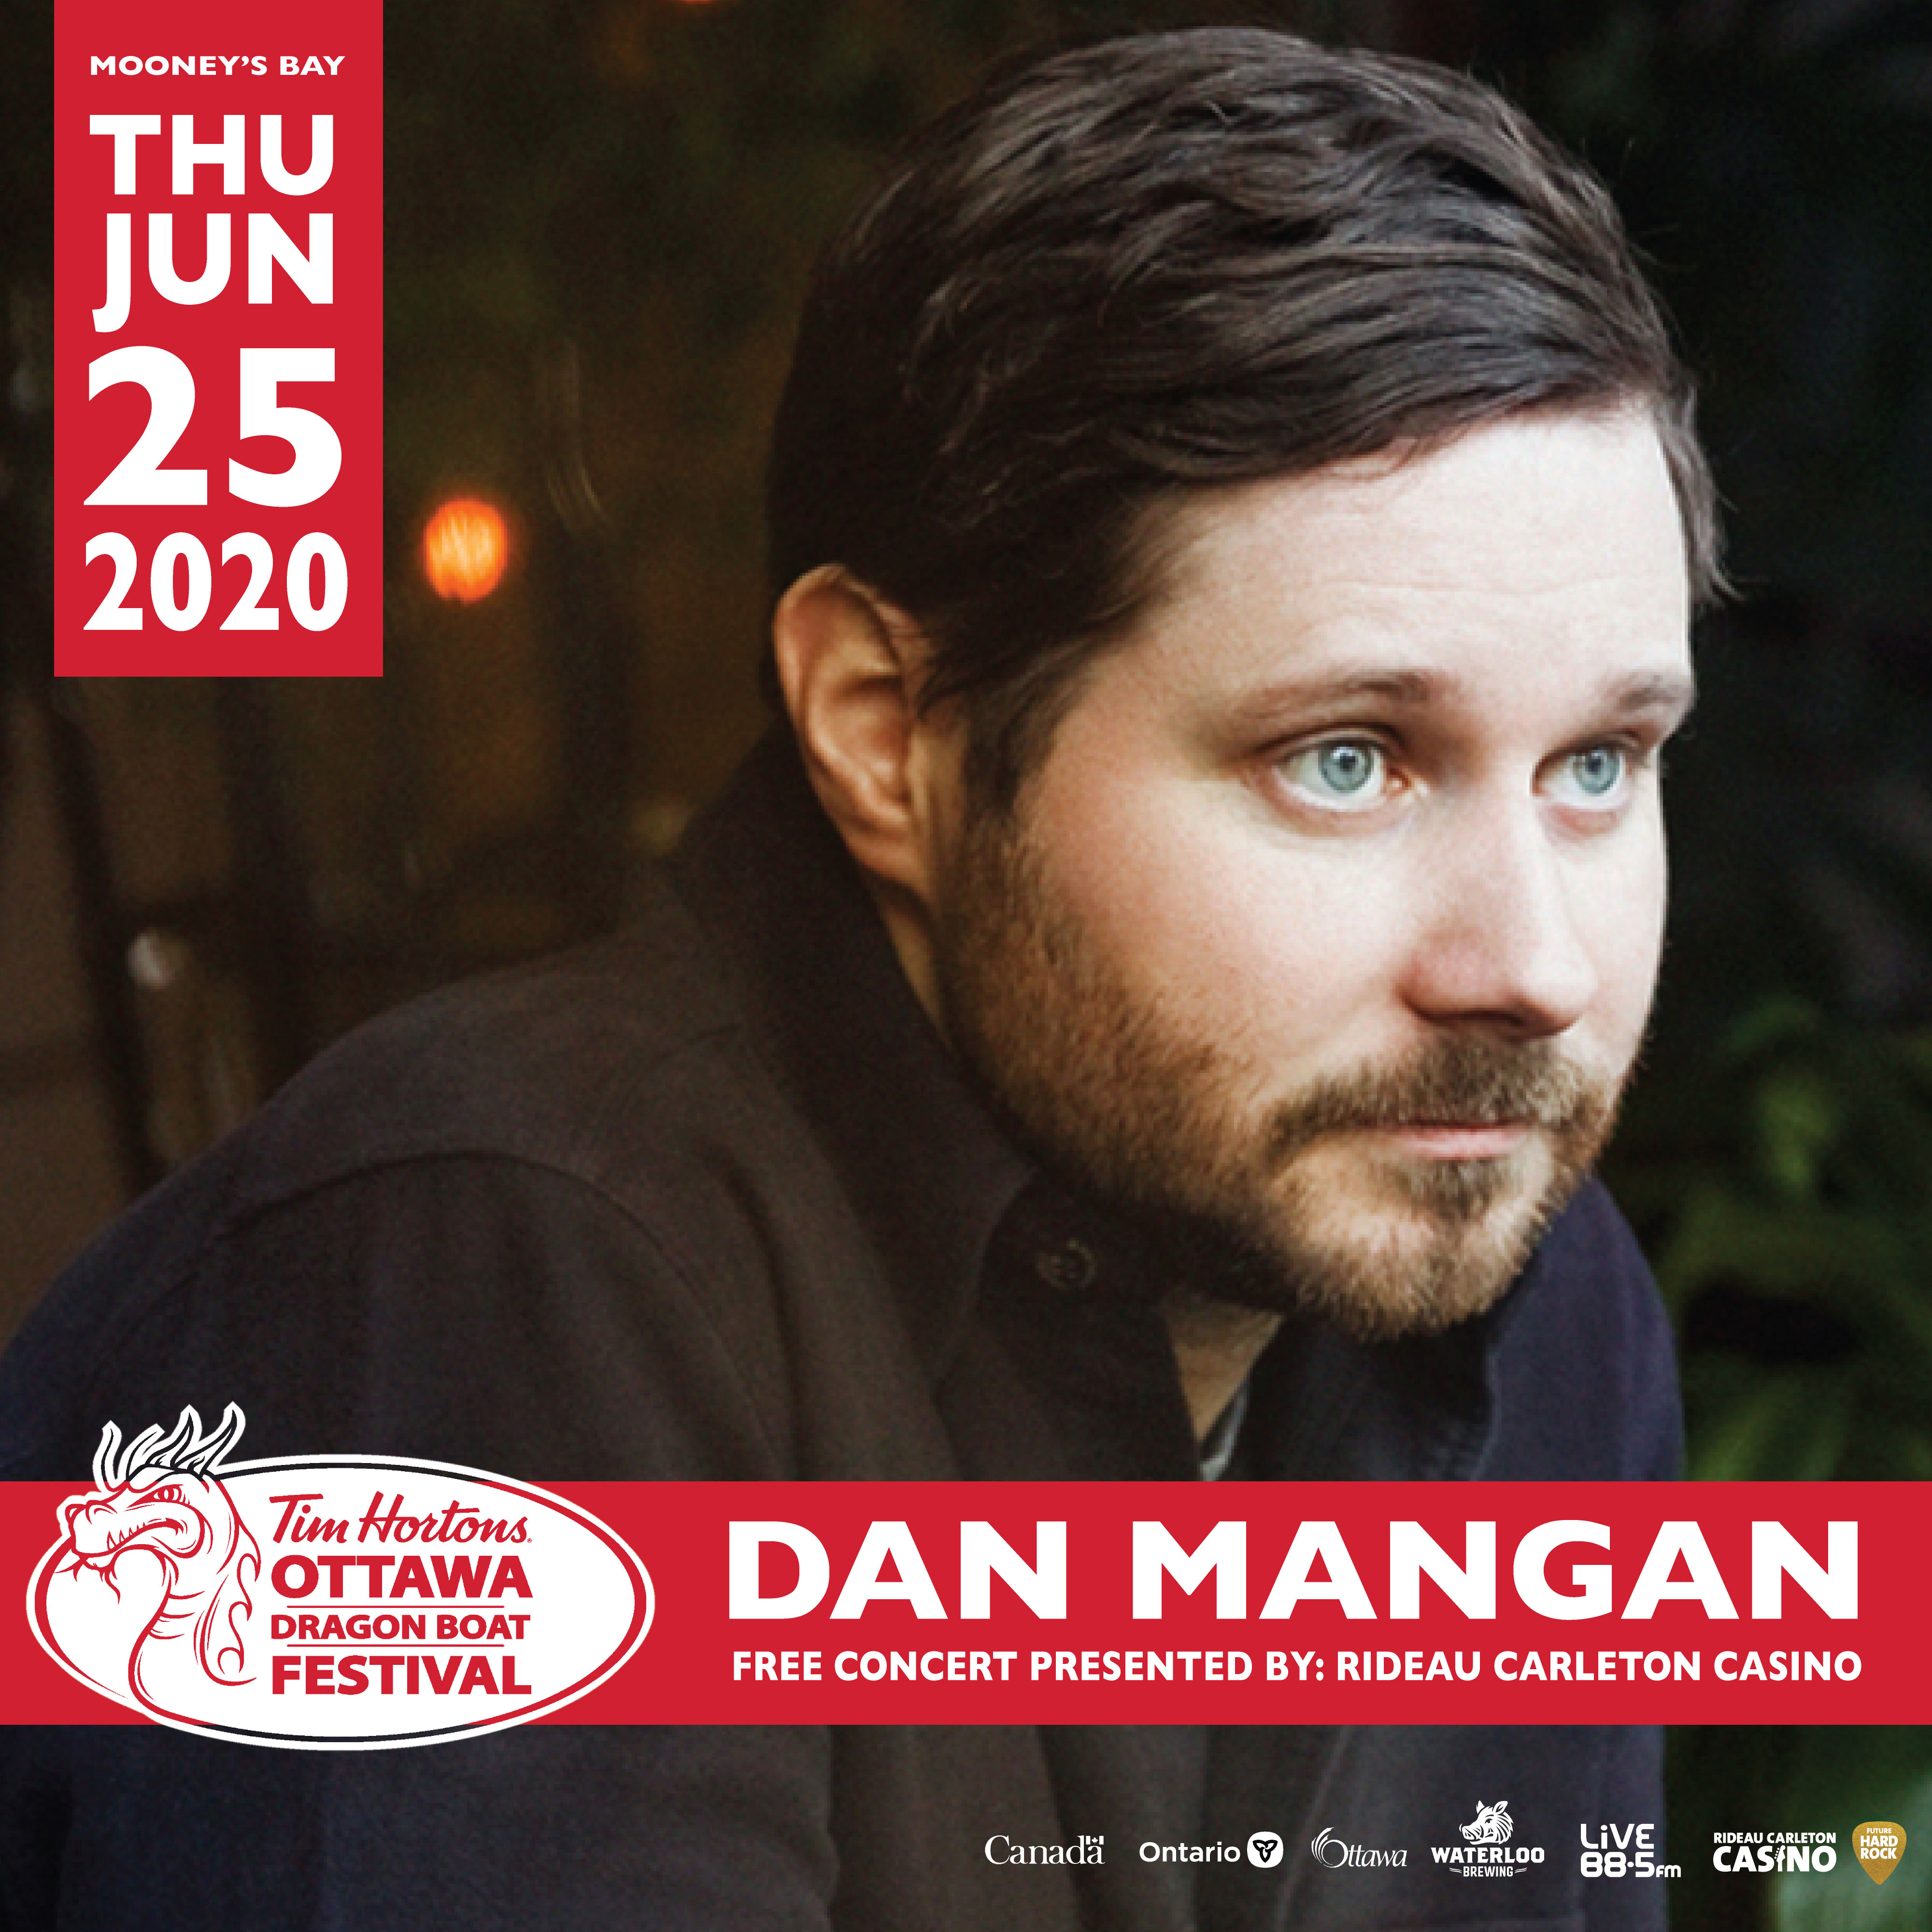 Two-time JUNO award-winning musician and songwriter Dan Mangan to headline a free concert on Thursday June 25, 2020 at the Tim Horton Ottawa Dragon Boat Festival